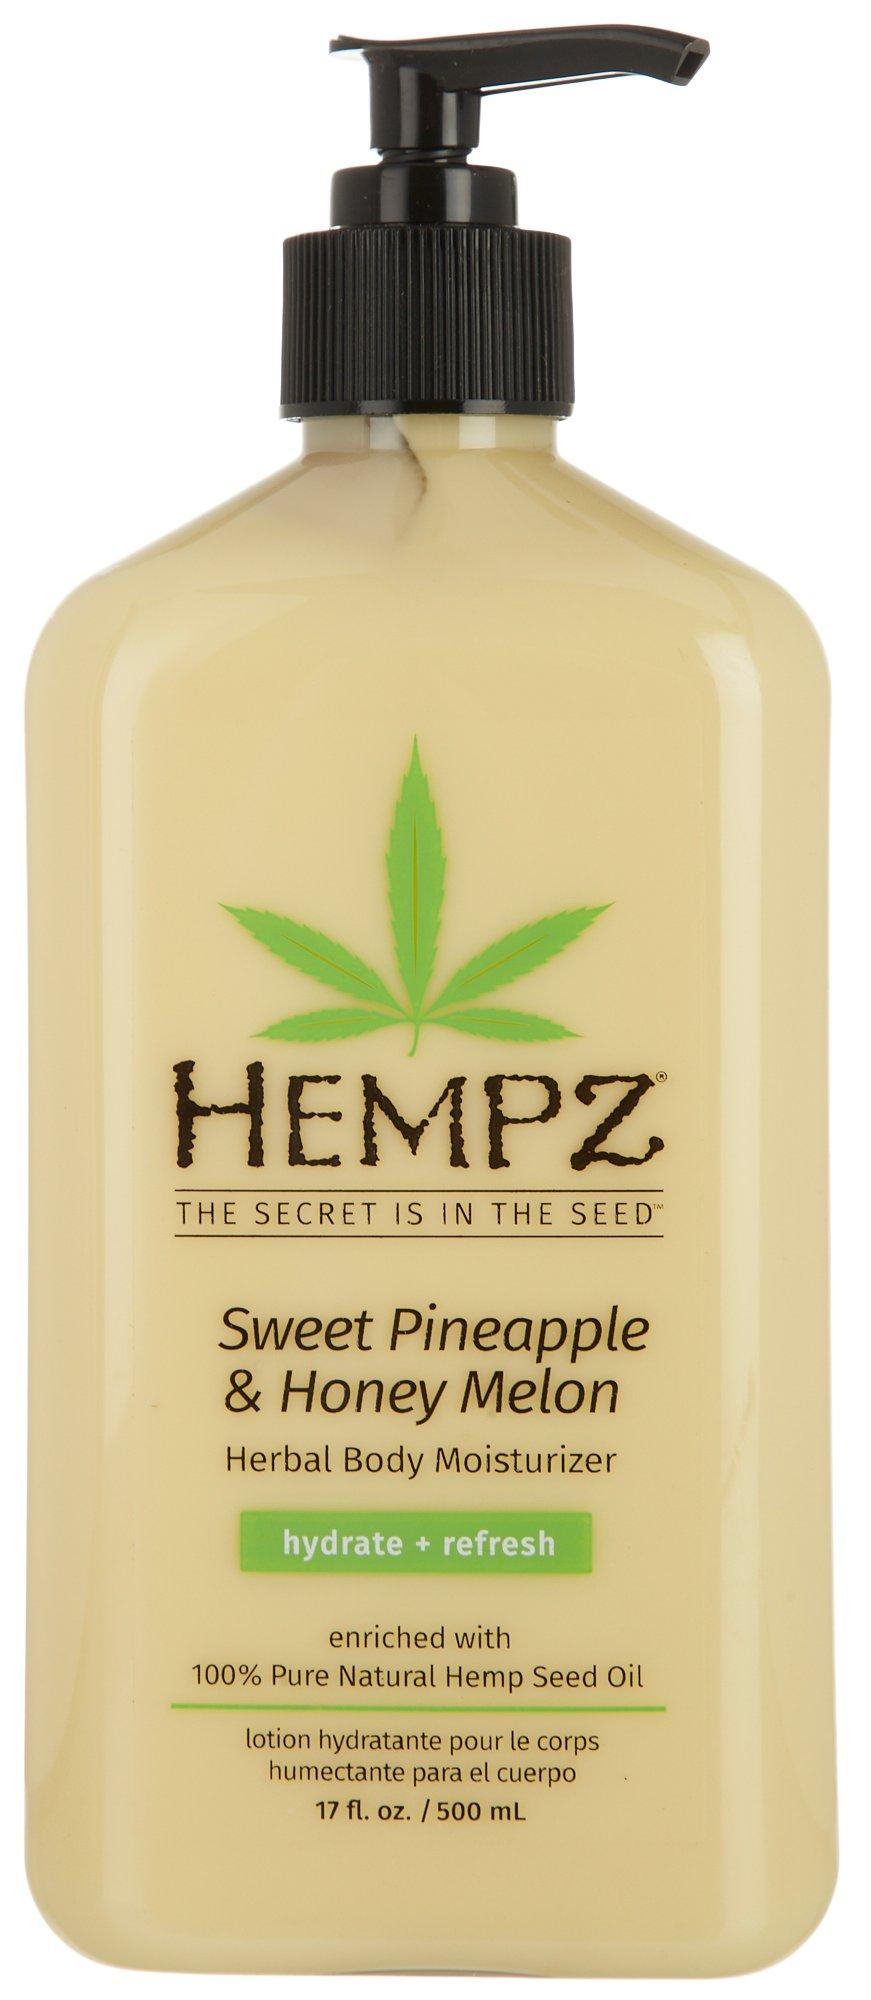 Hempz Pineapple & Honey Melon Herbal Body Moisturizer